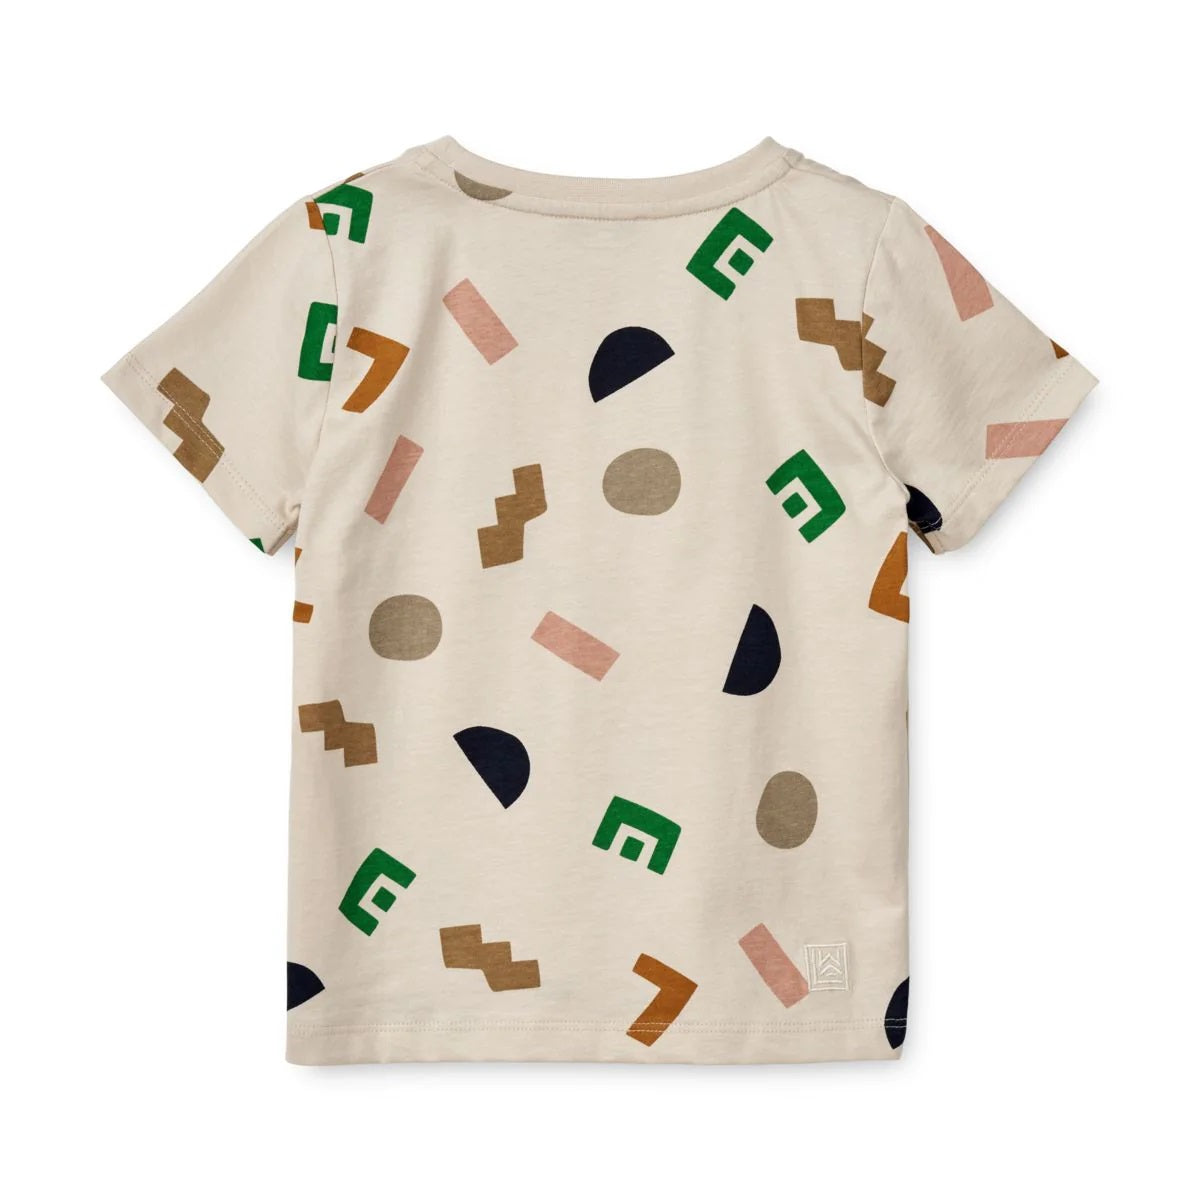 Liewood Apia Short Sleeve Organic Cotton T-shirt - Graphic Alphabet/Sandy